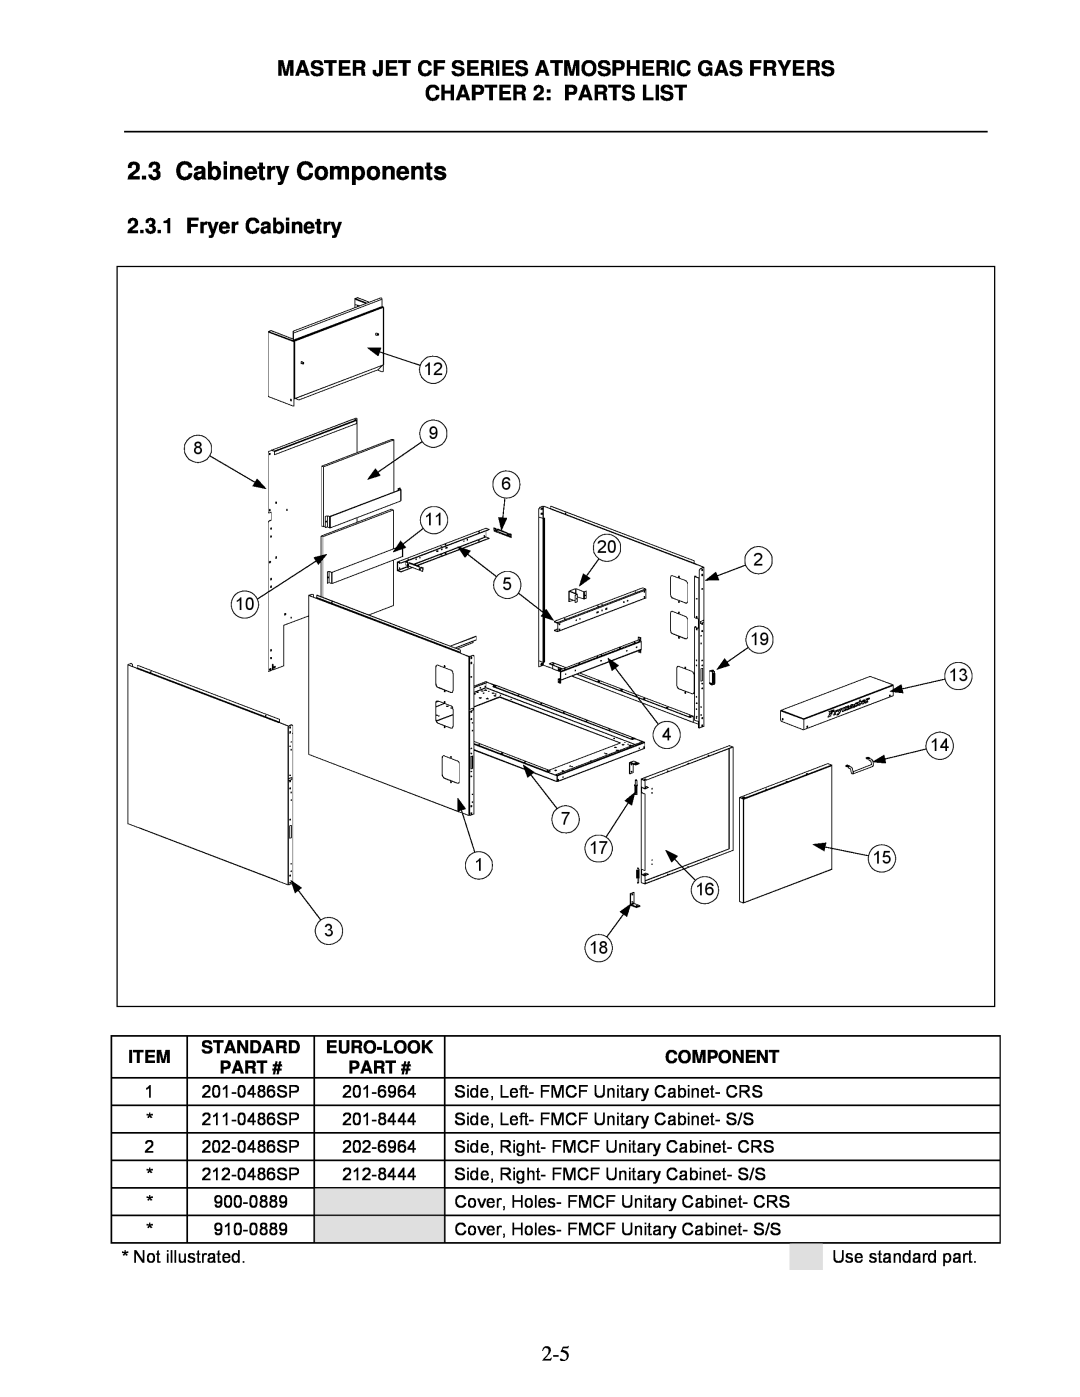 Frymaster KJ3FC Cabinetry Components, Fryer Cabinetry, Master Jet Cf Series Atmospheric Gas Fryers Parts List, Standard 